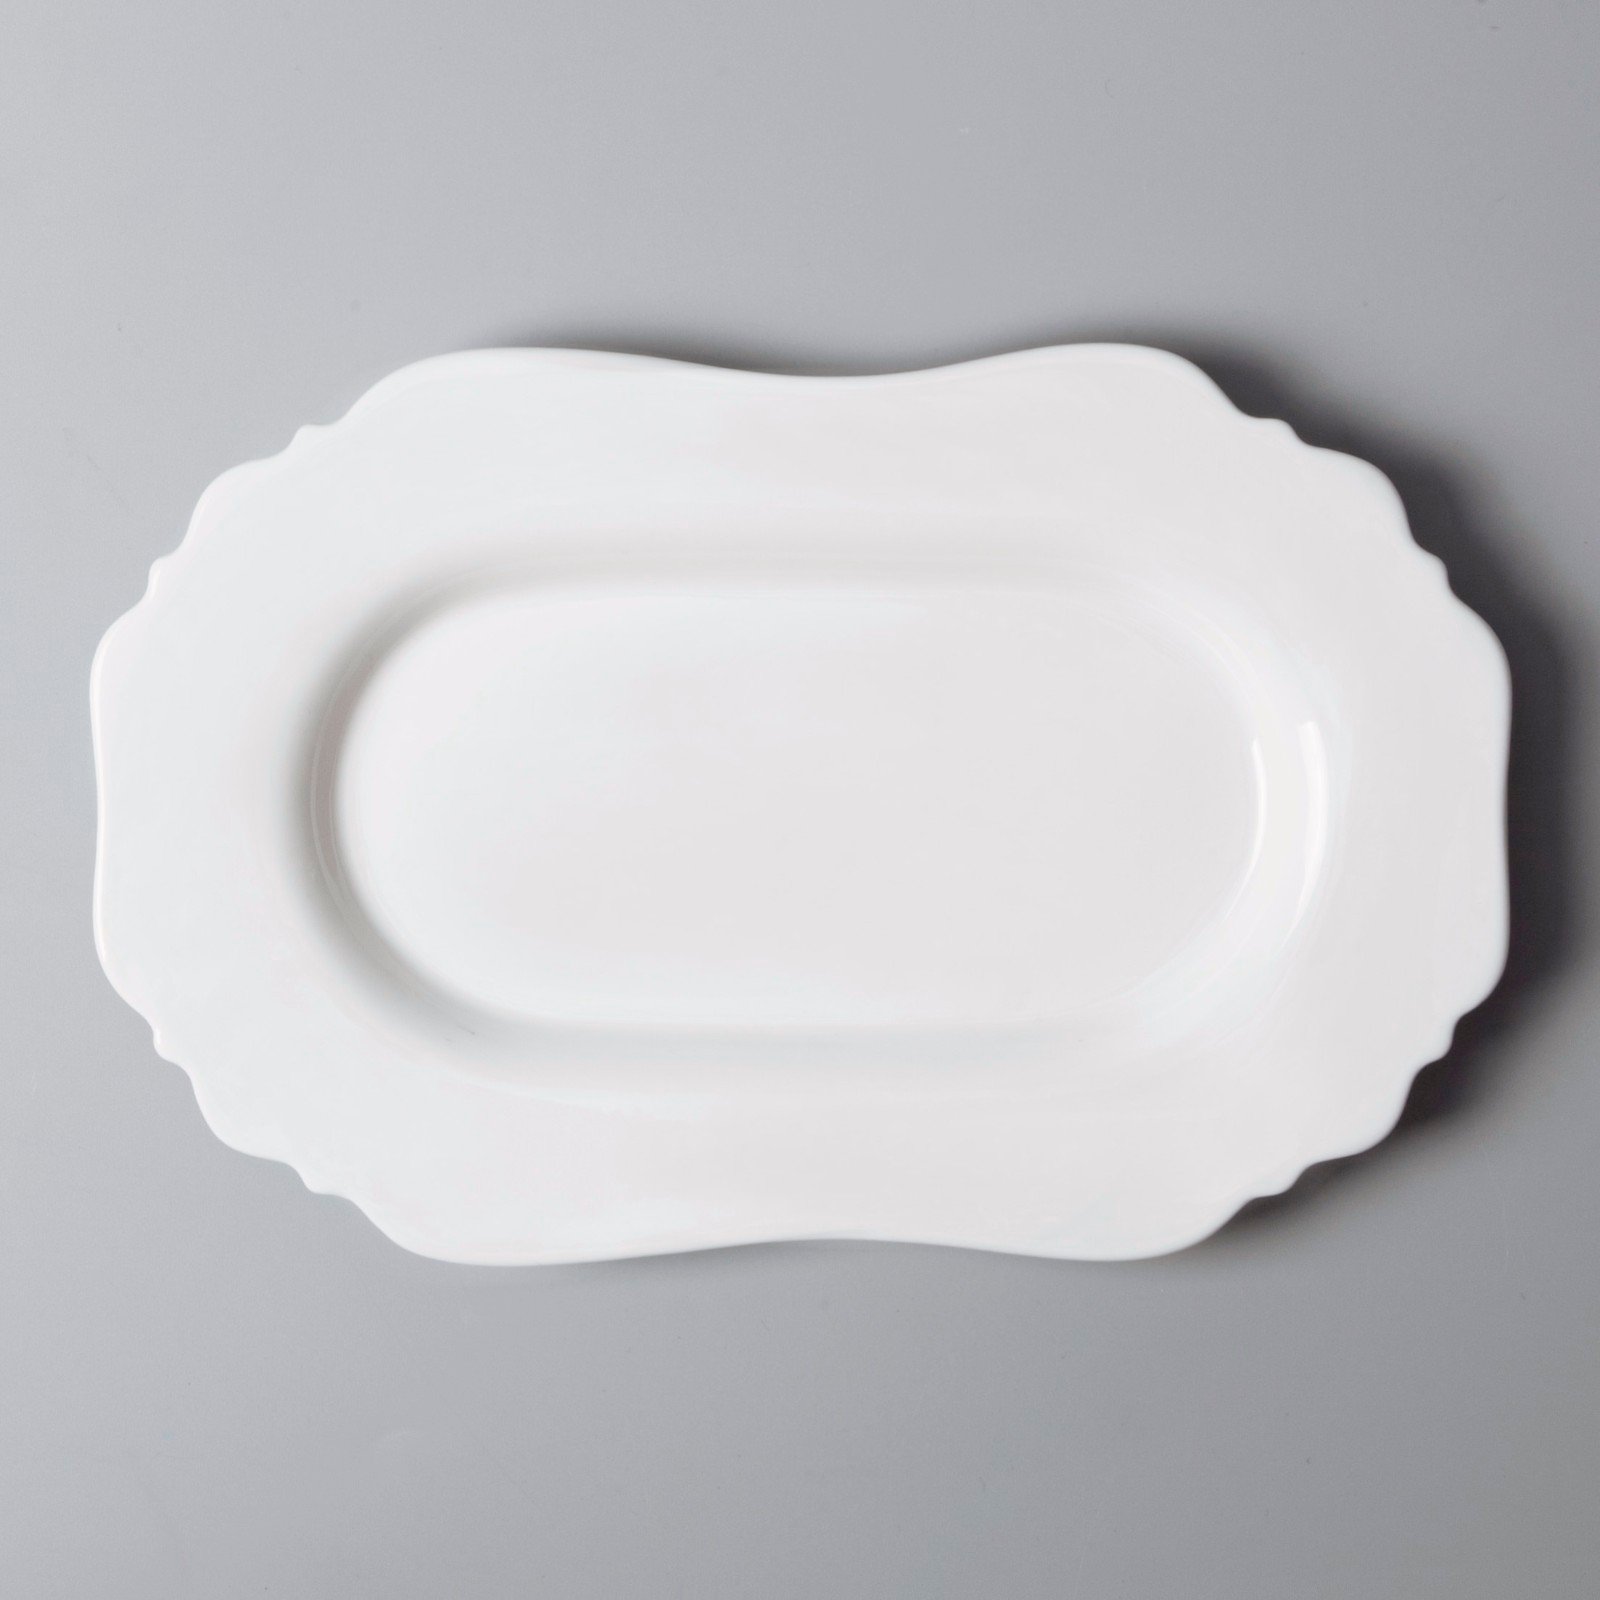 Two Eight Vietnamese cheap porcelain dinner plates series for hotel-5